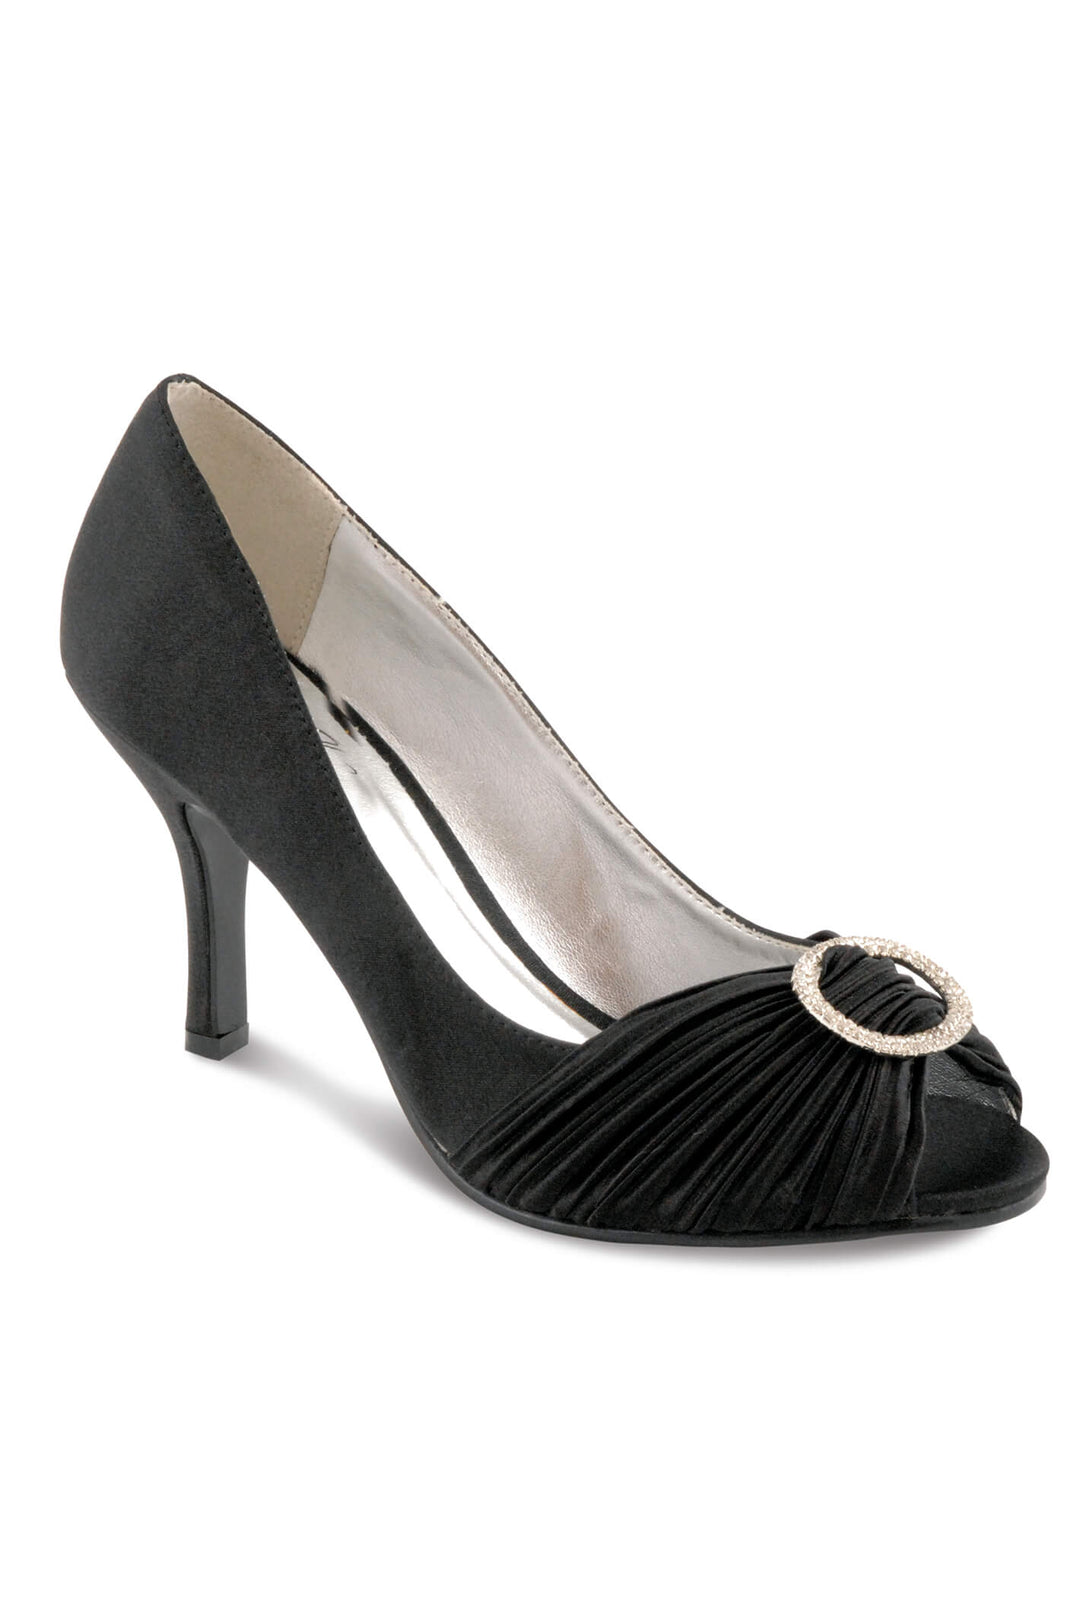 Lunar FLV132 Sienna Black Peep Toe Diamante Court Shoe - Experience Boutique